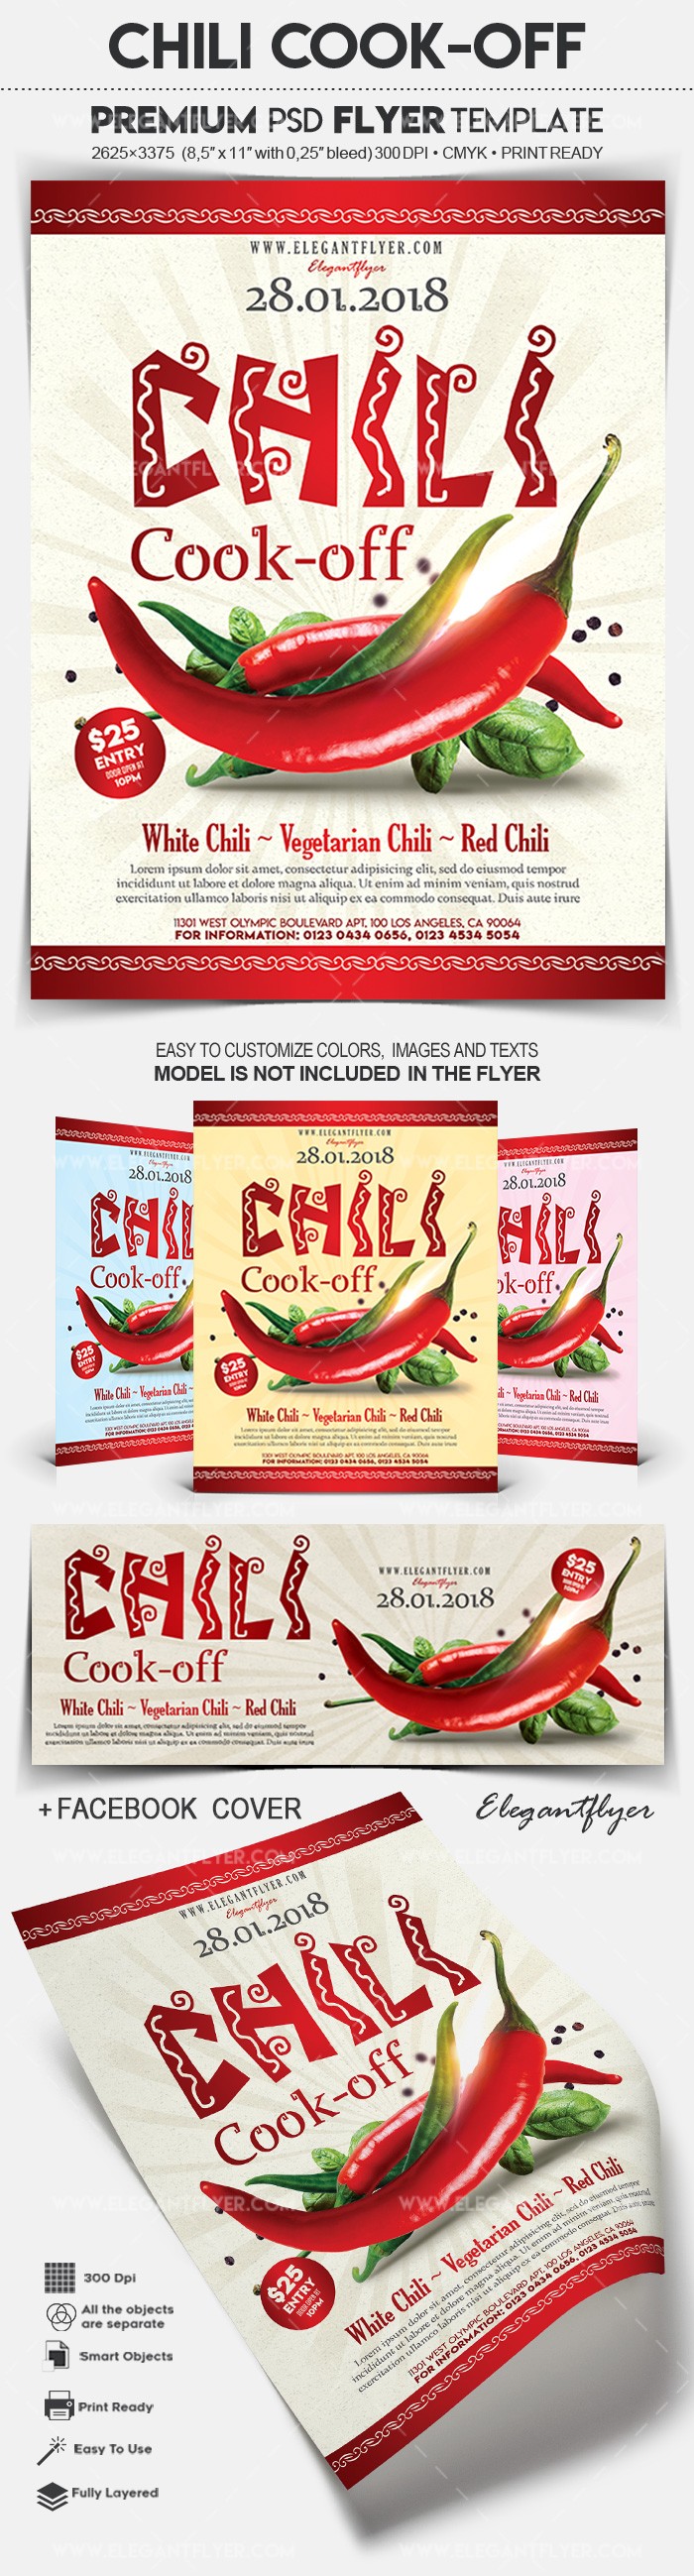 Chili Cook-off by ElegantFlyer